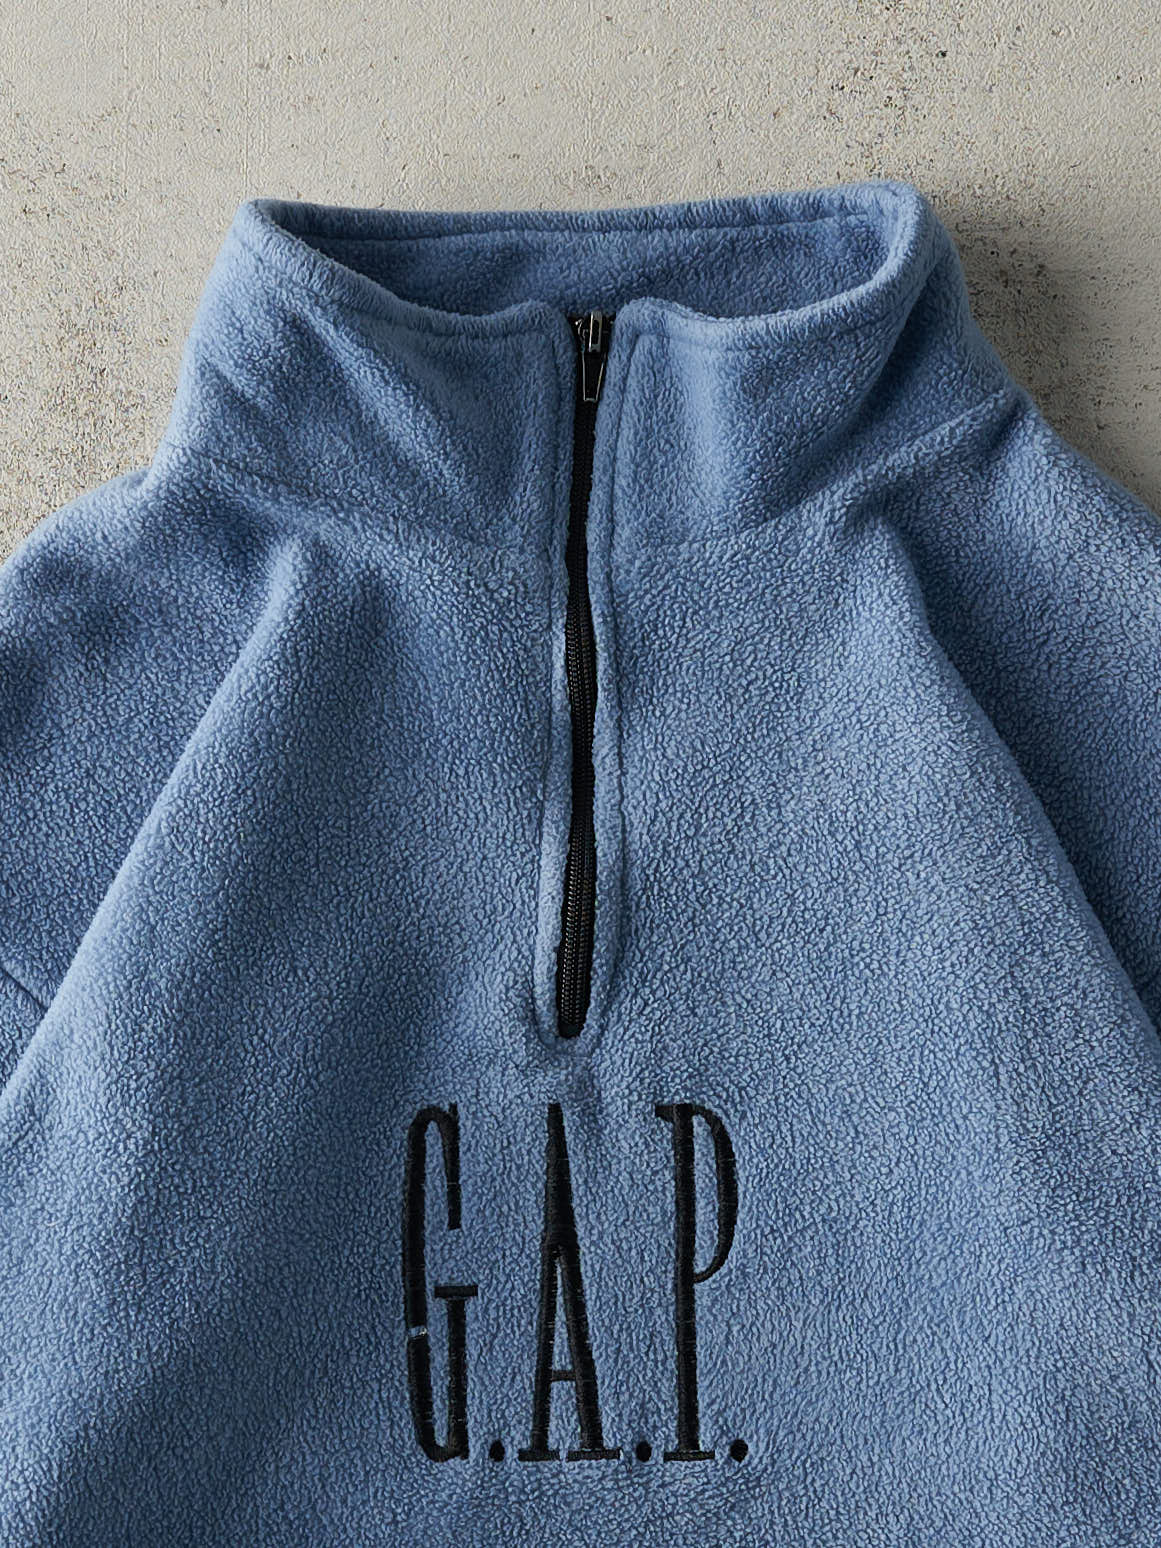 Vintage 90s Blue Gap Fleece Quarter Zip Sweater (M)